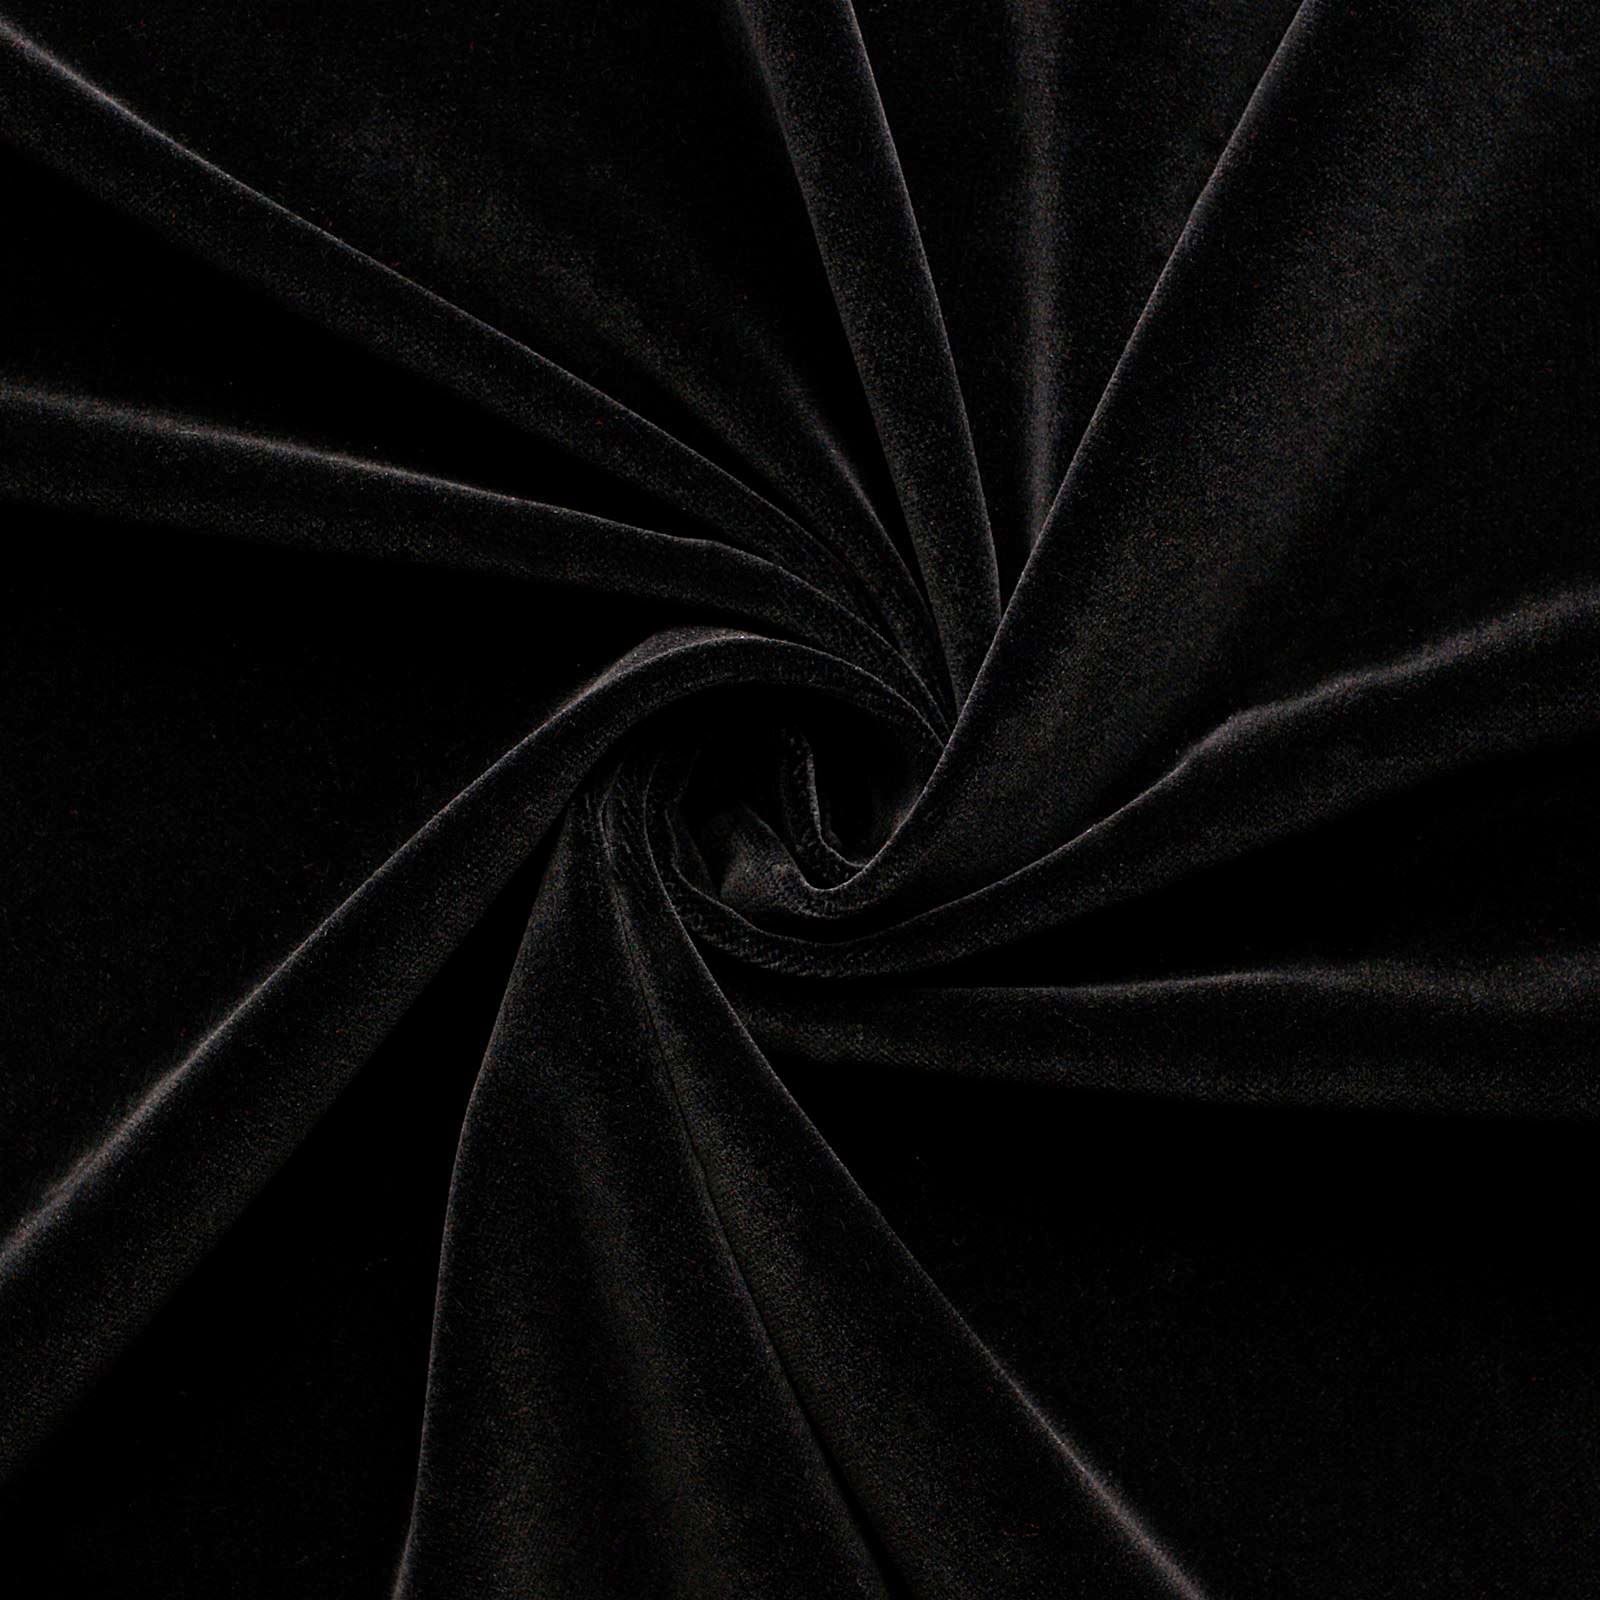 Juwel – Terciopelo de algodón (negro)